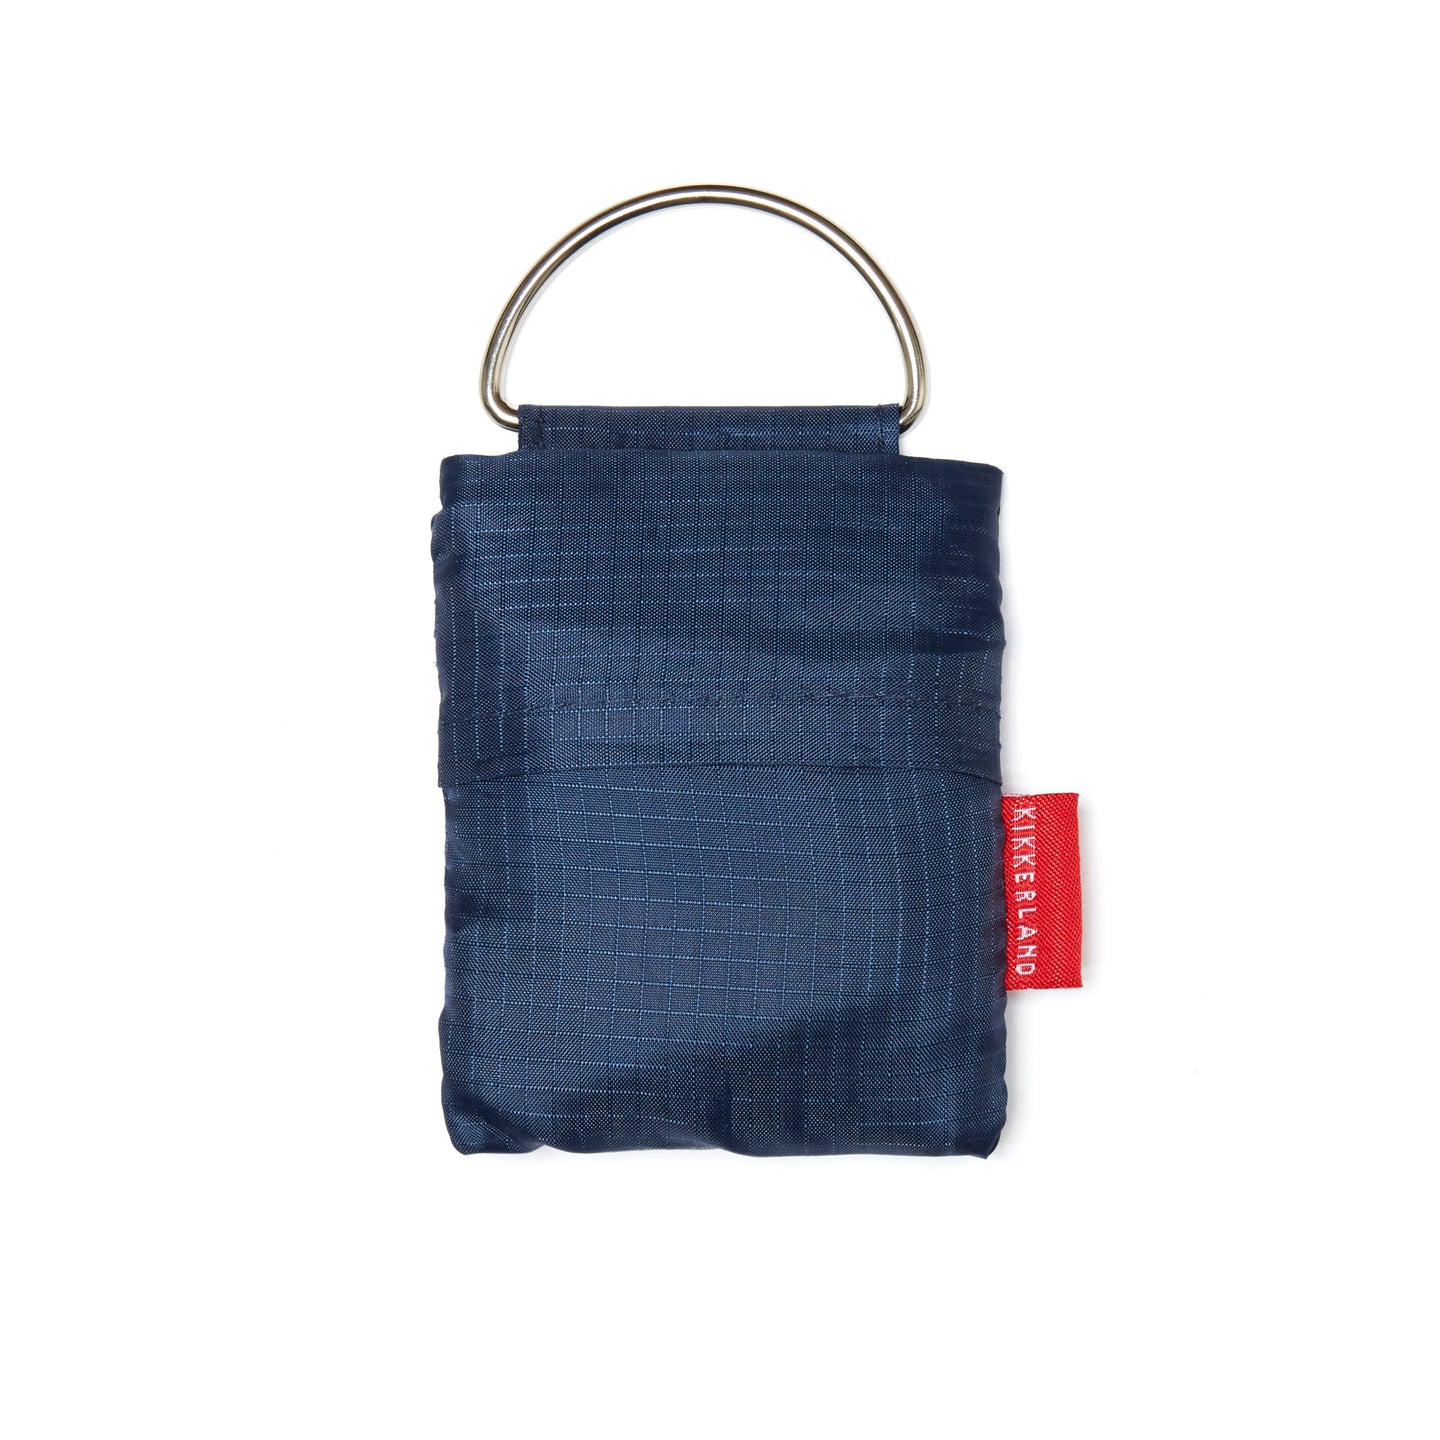 key ring shopping bag navy blue by kikkerland